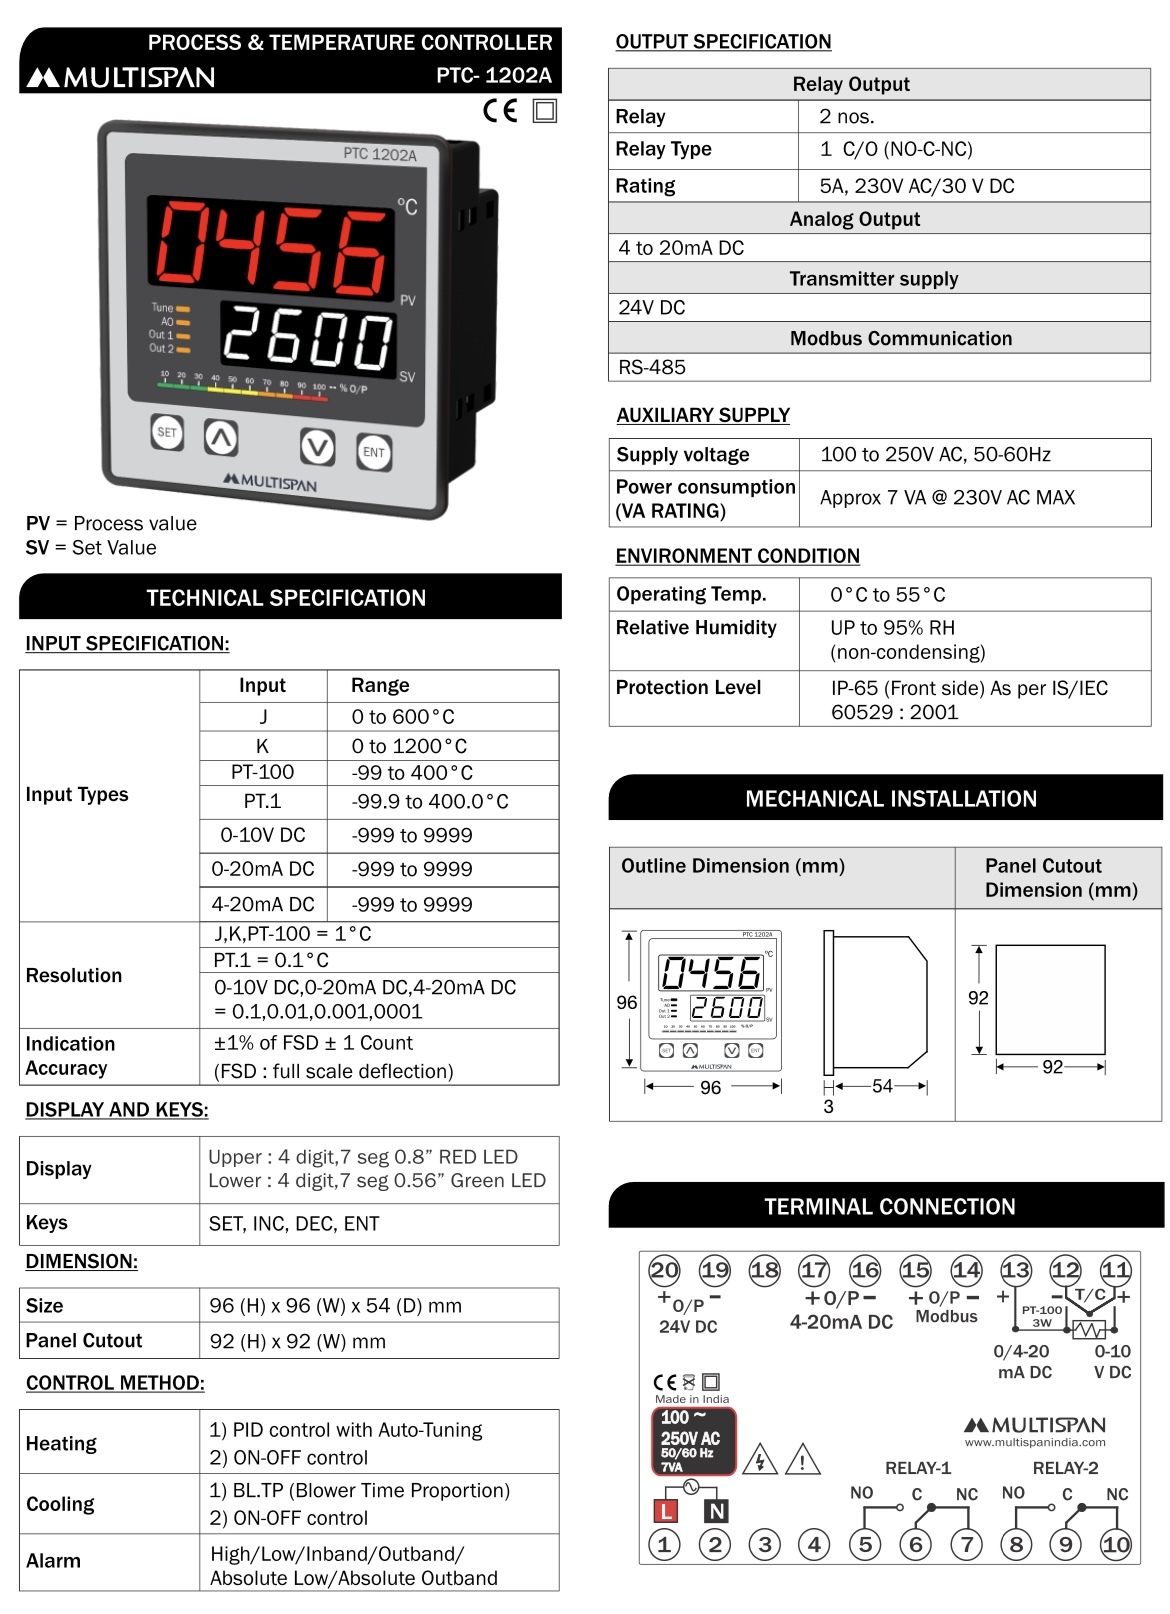 PTC-1202A-M1 temperature controller